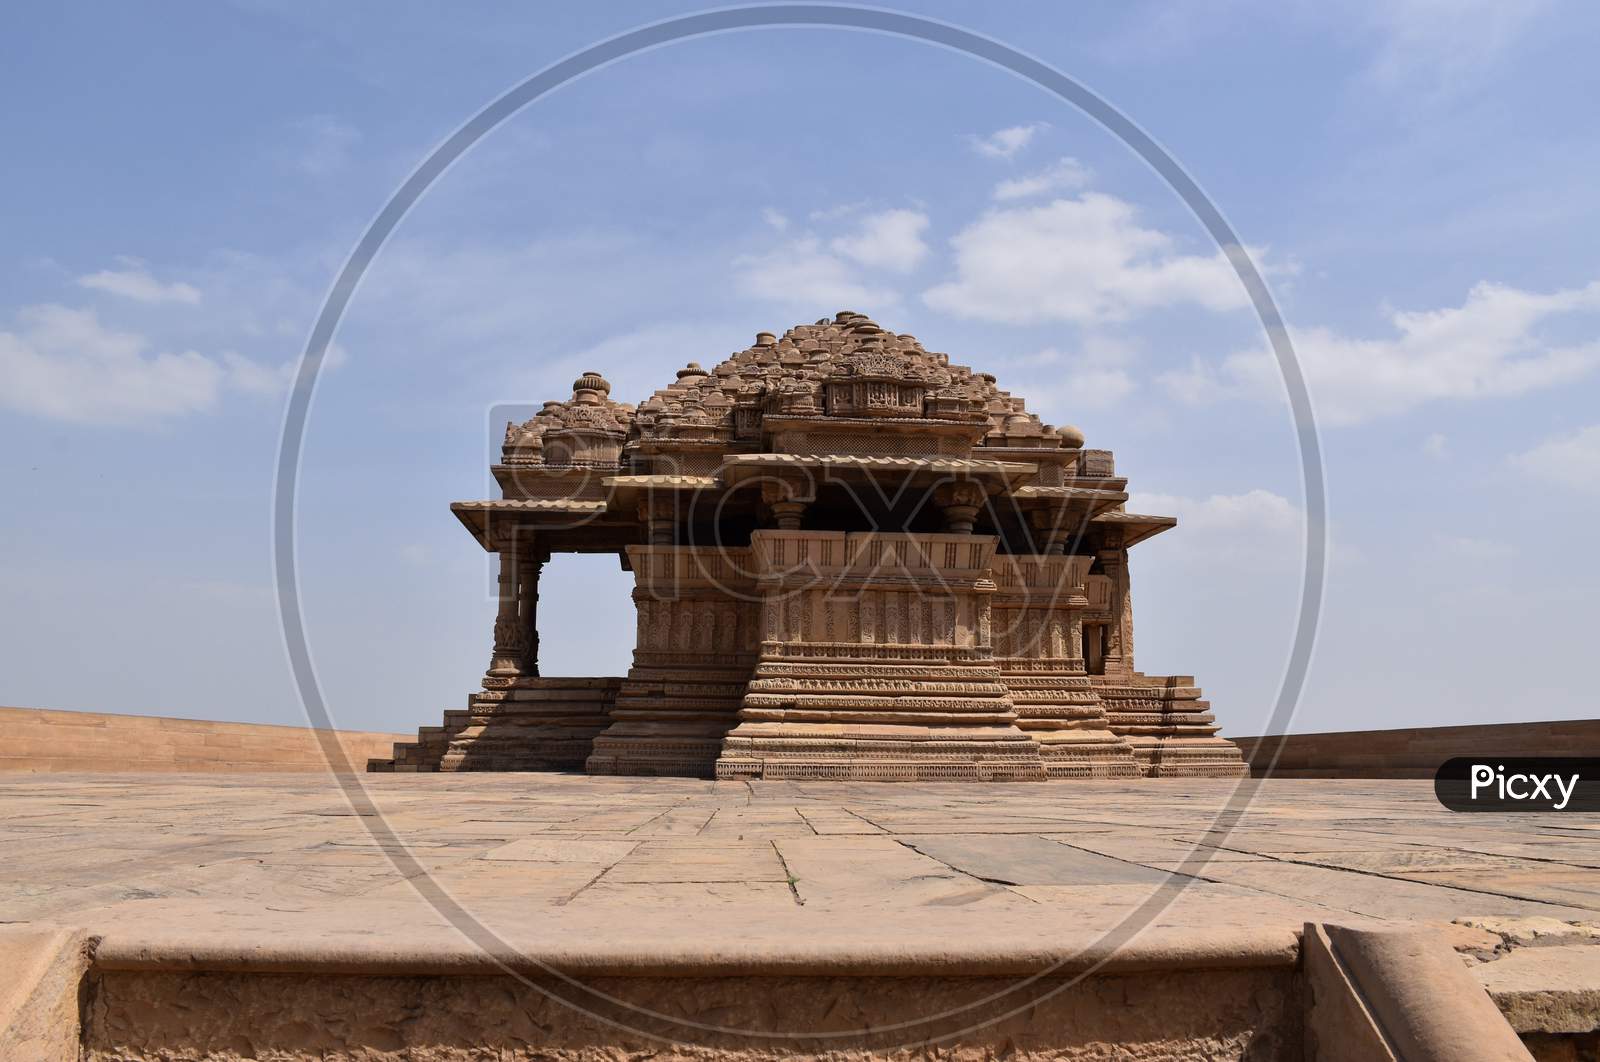 Gwalior, Madhya Pradesh/India : March 15, 2020 - Jain Temple In Gwalior Fort